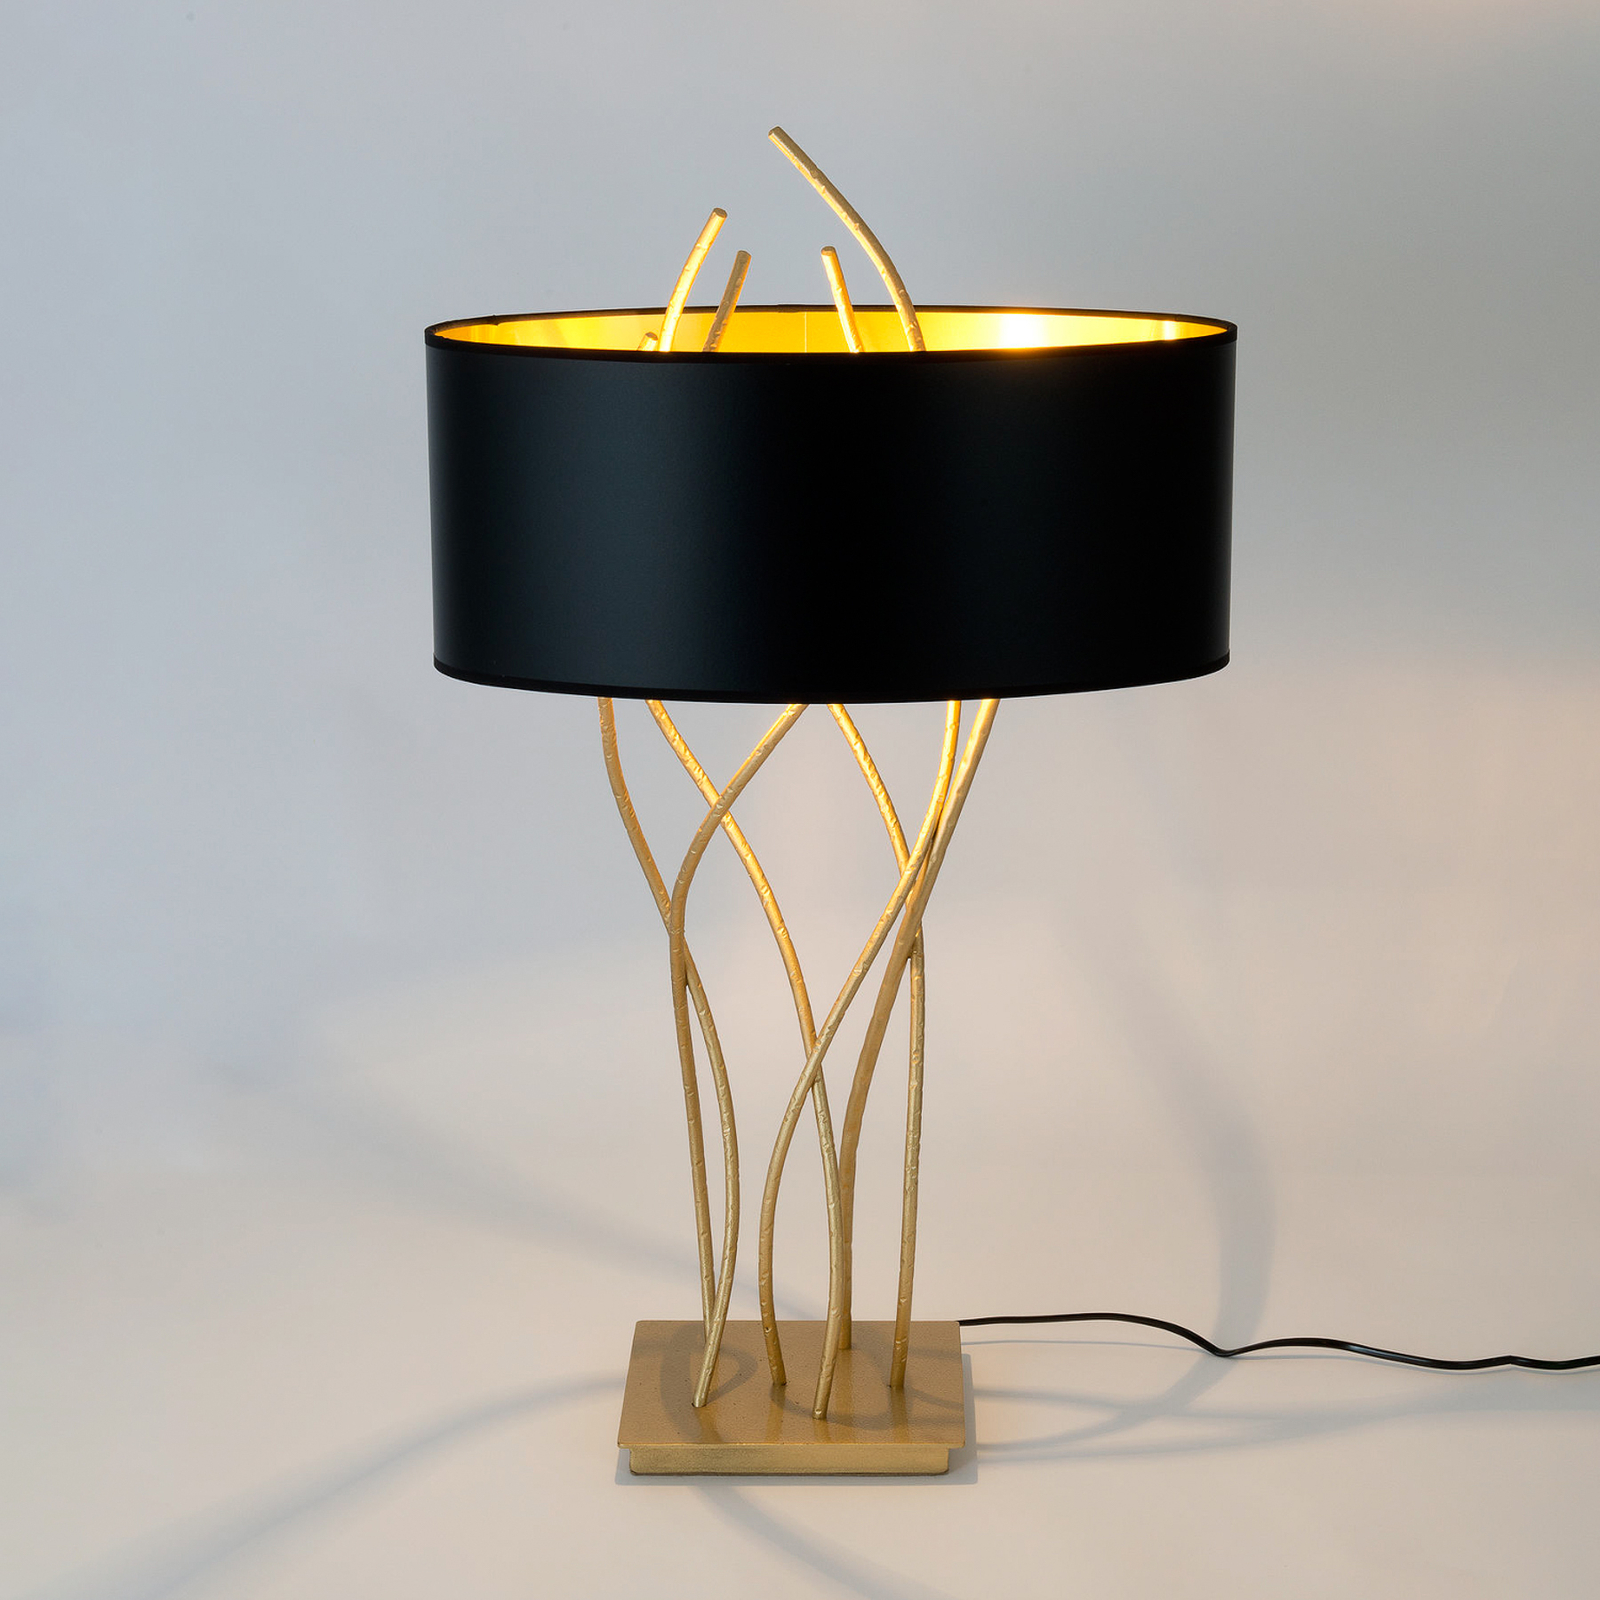 Elba ovale tafellamp, goud/zwart, hoogte 75 cm, ijzer